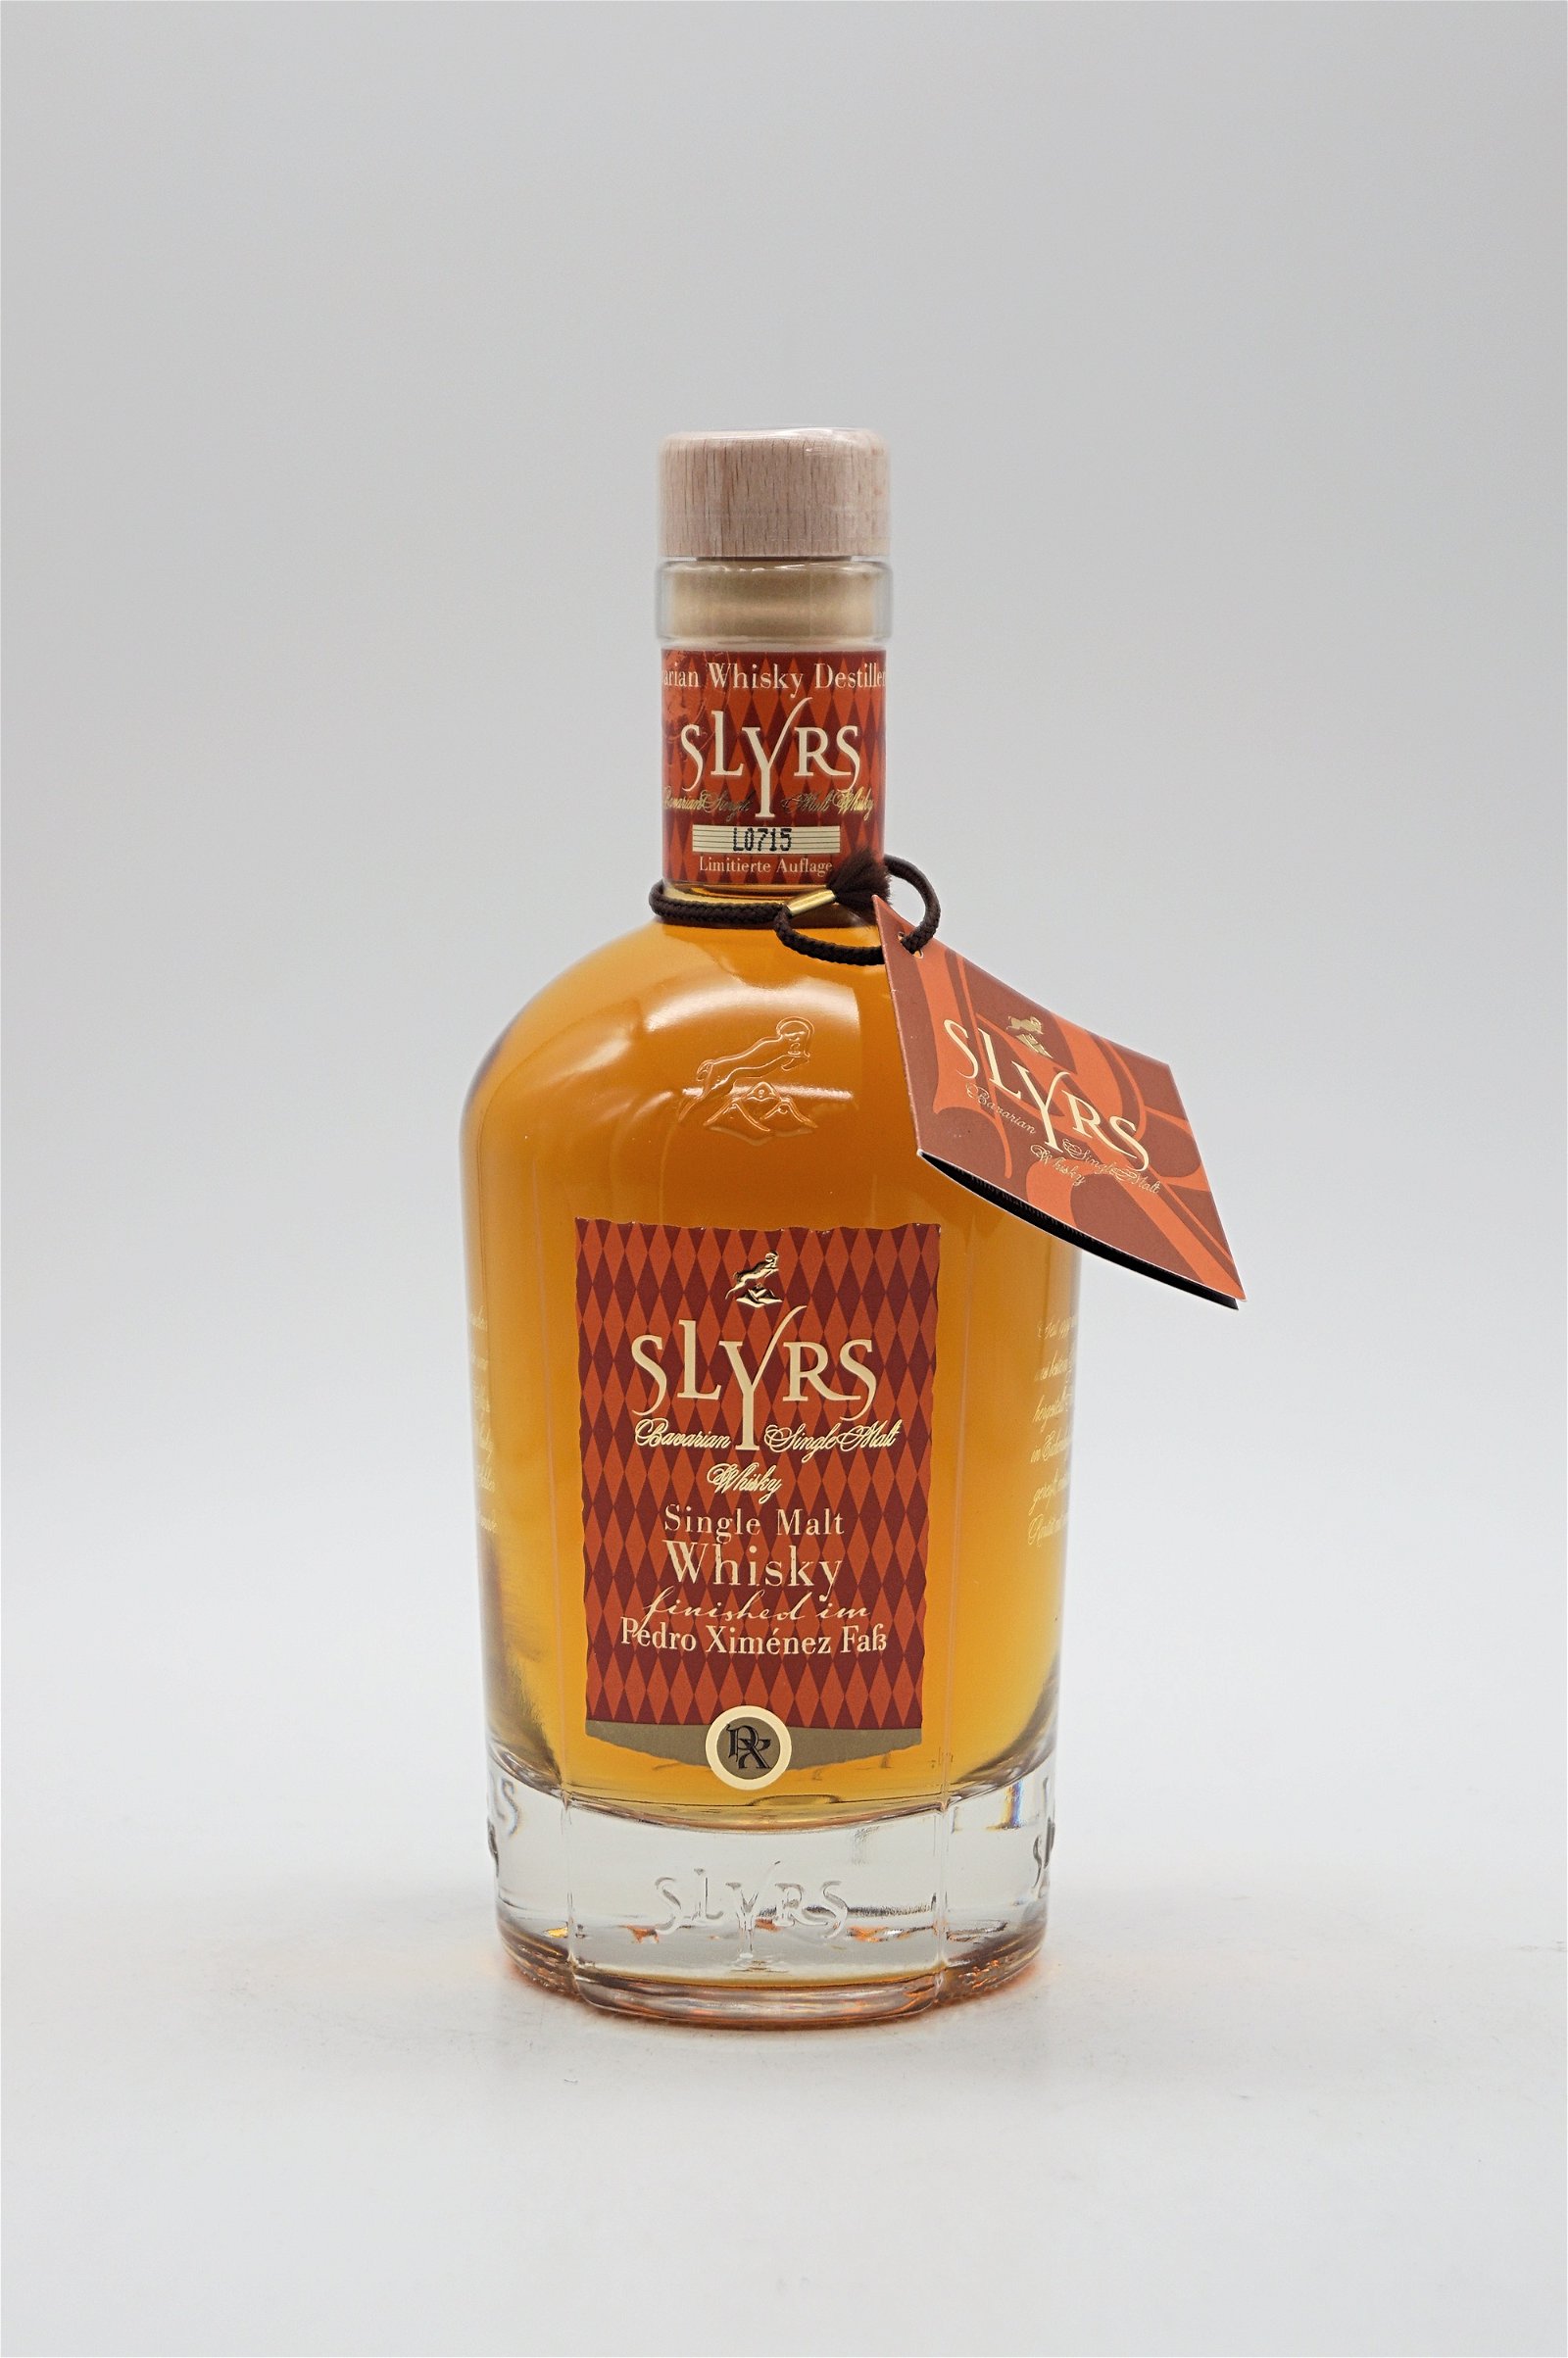 Slyrs Single Malt Whisky Pedro Ximenez Cask Finishing